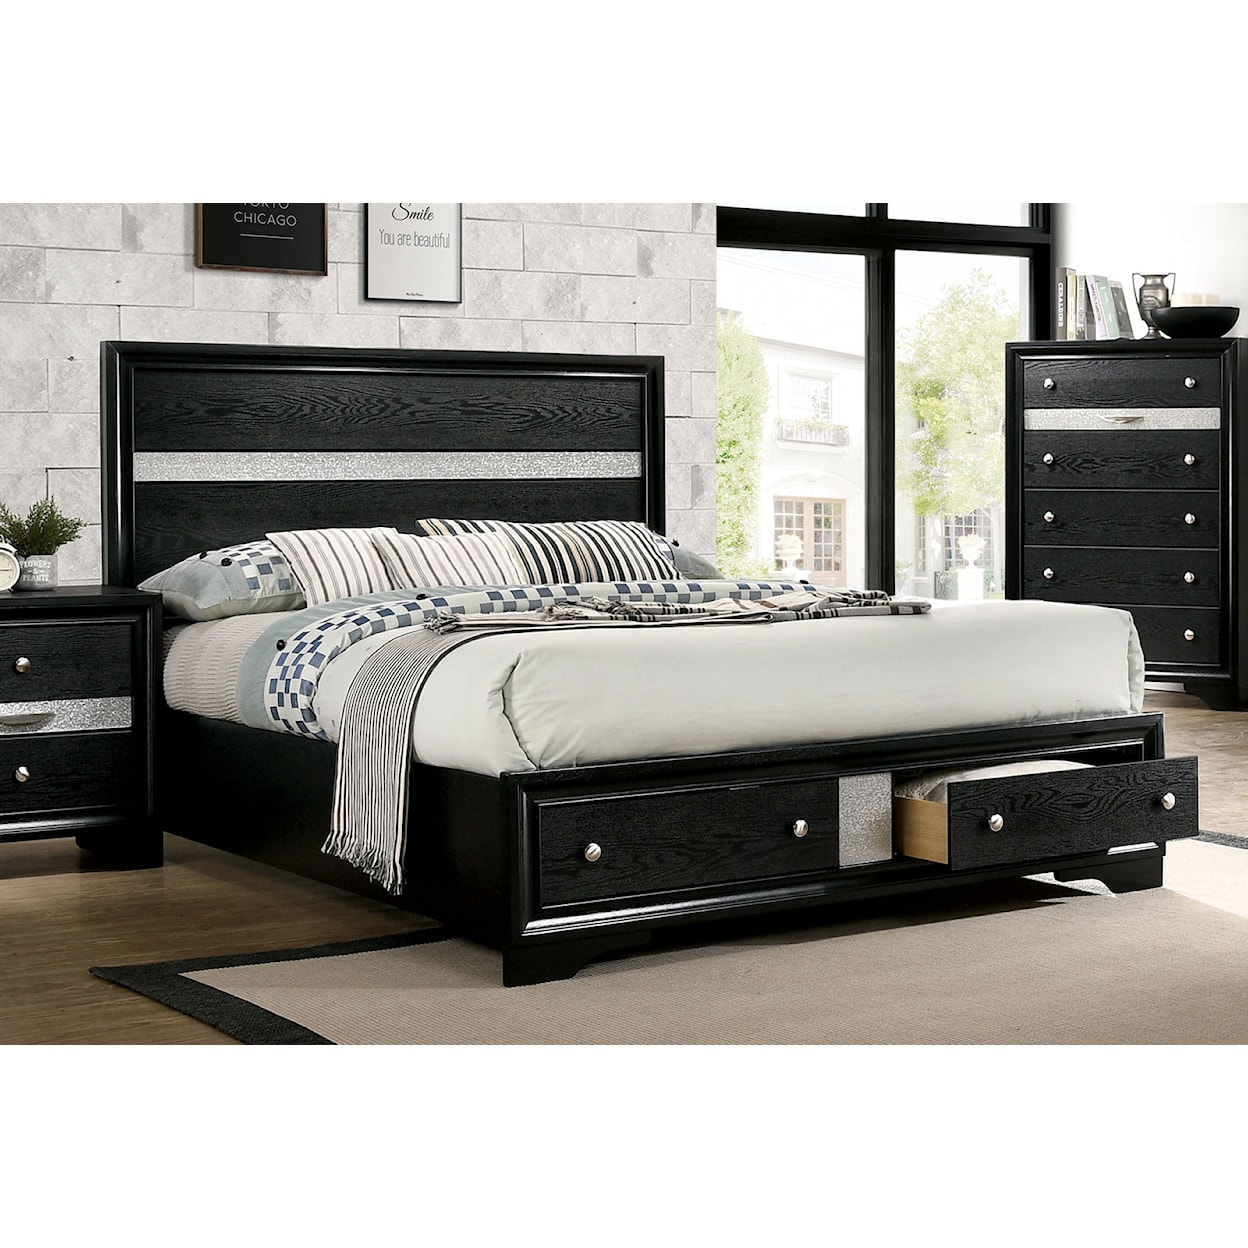 Furniture of America Chrissy King Storage Bed